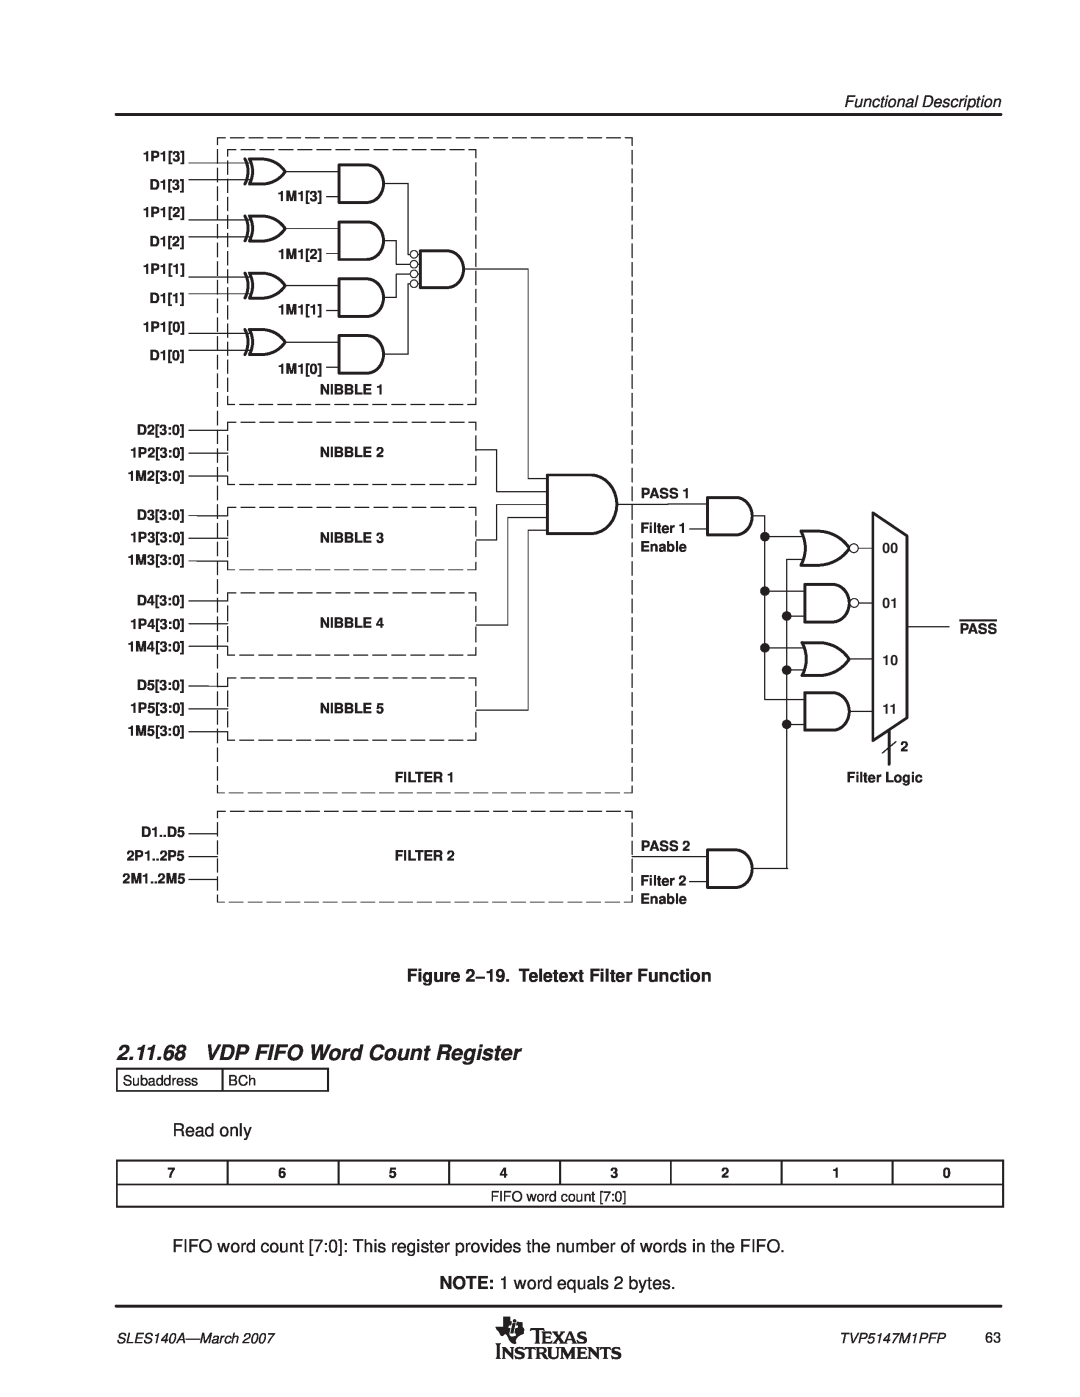 Texas Instruments TVP5147M1PFP manual VDP FIFO Word Count Register, 19. Teletext Filter Function 